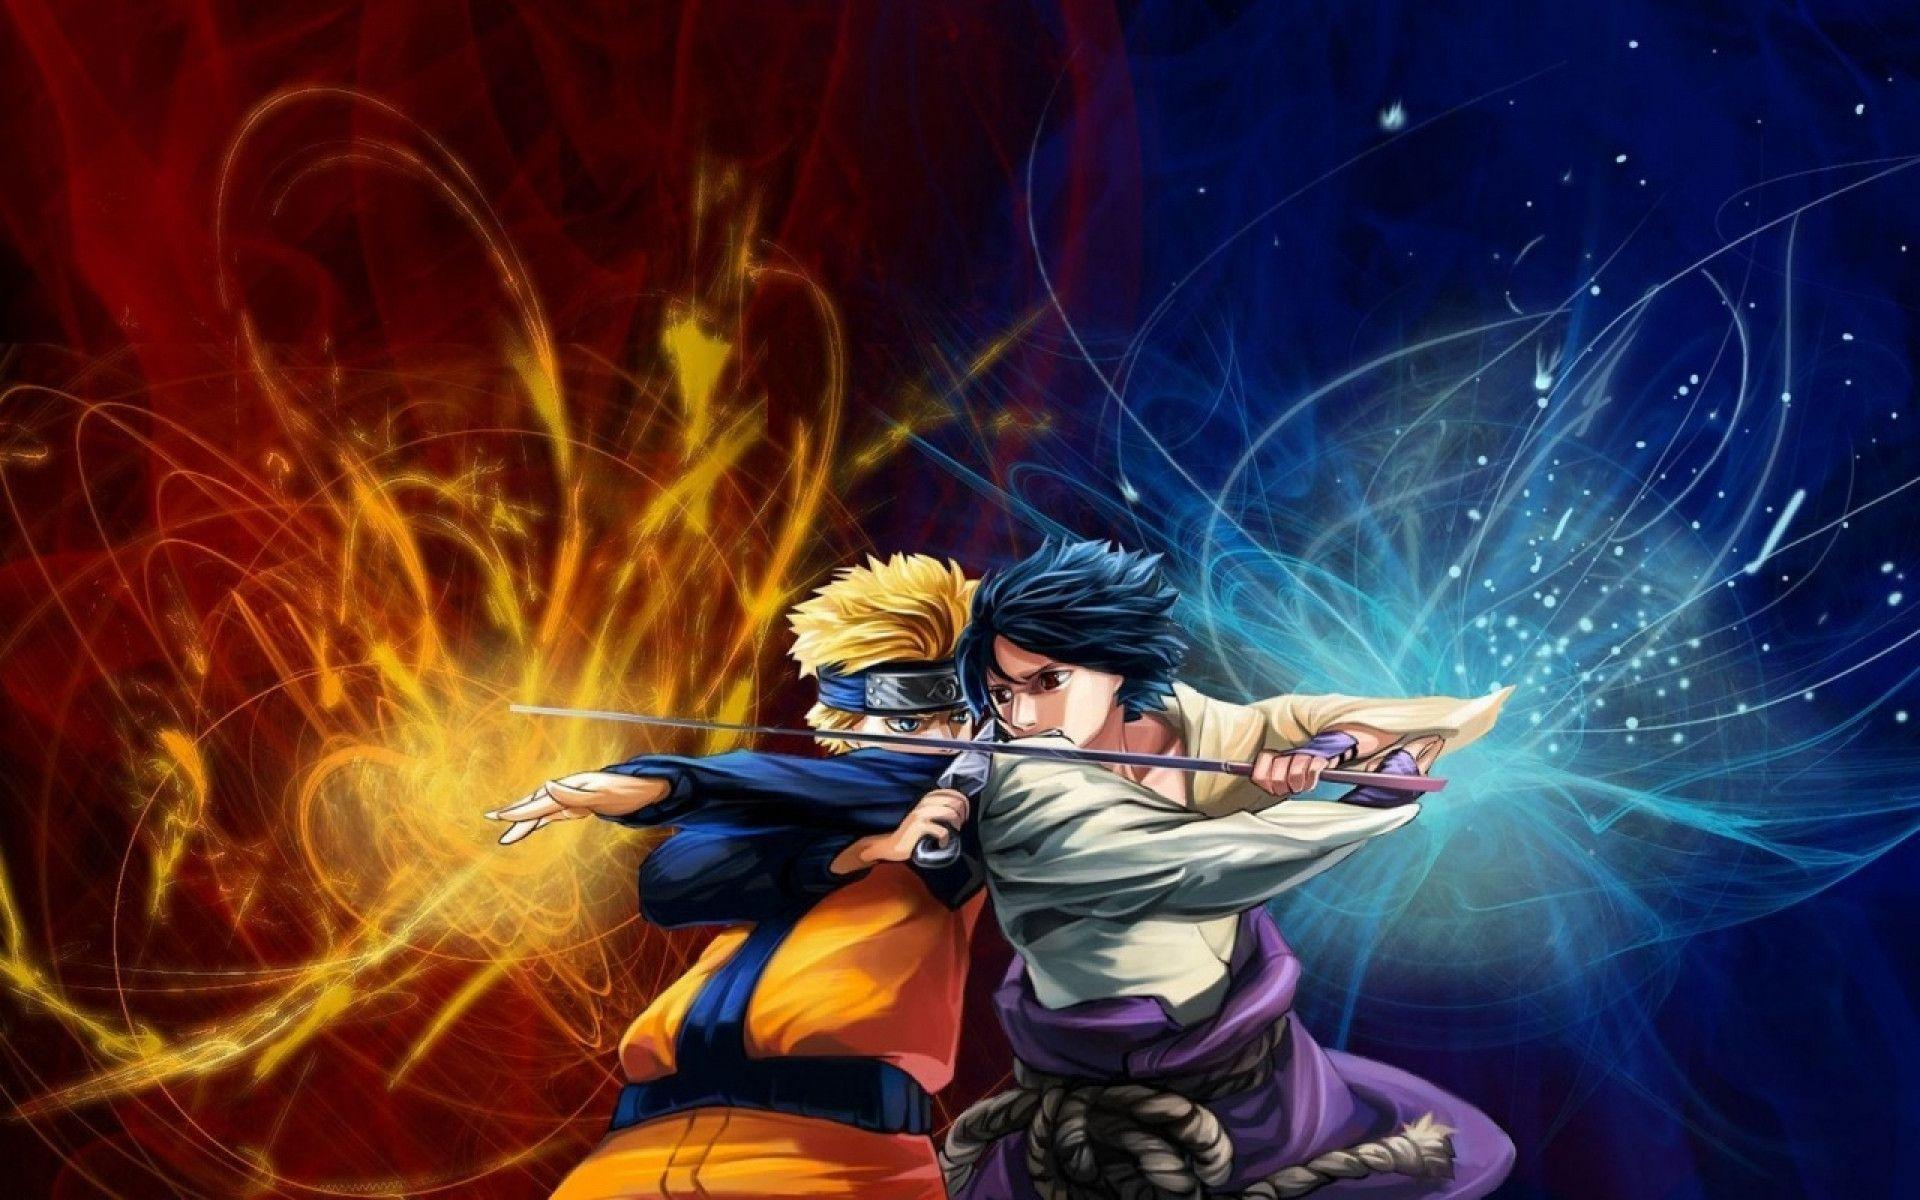 Shocking Cartoon Wallpaper Pack Naruto Vs Sasuke HD 1920x1200PX